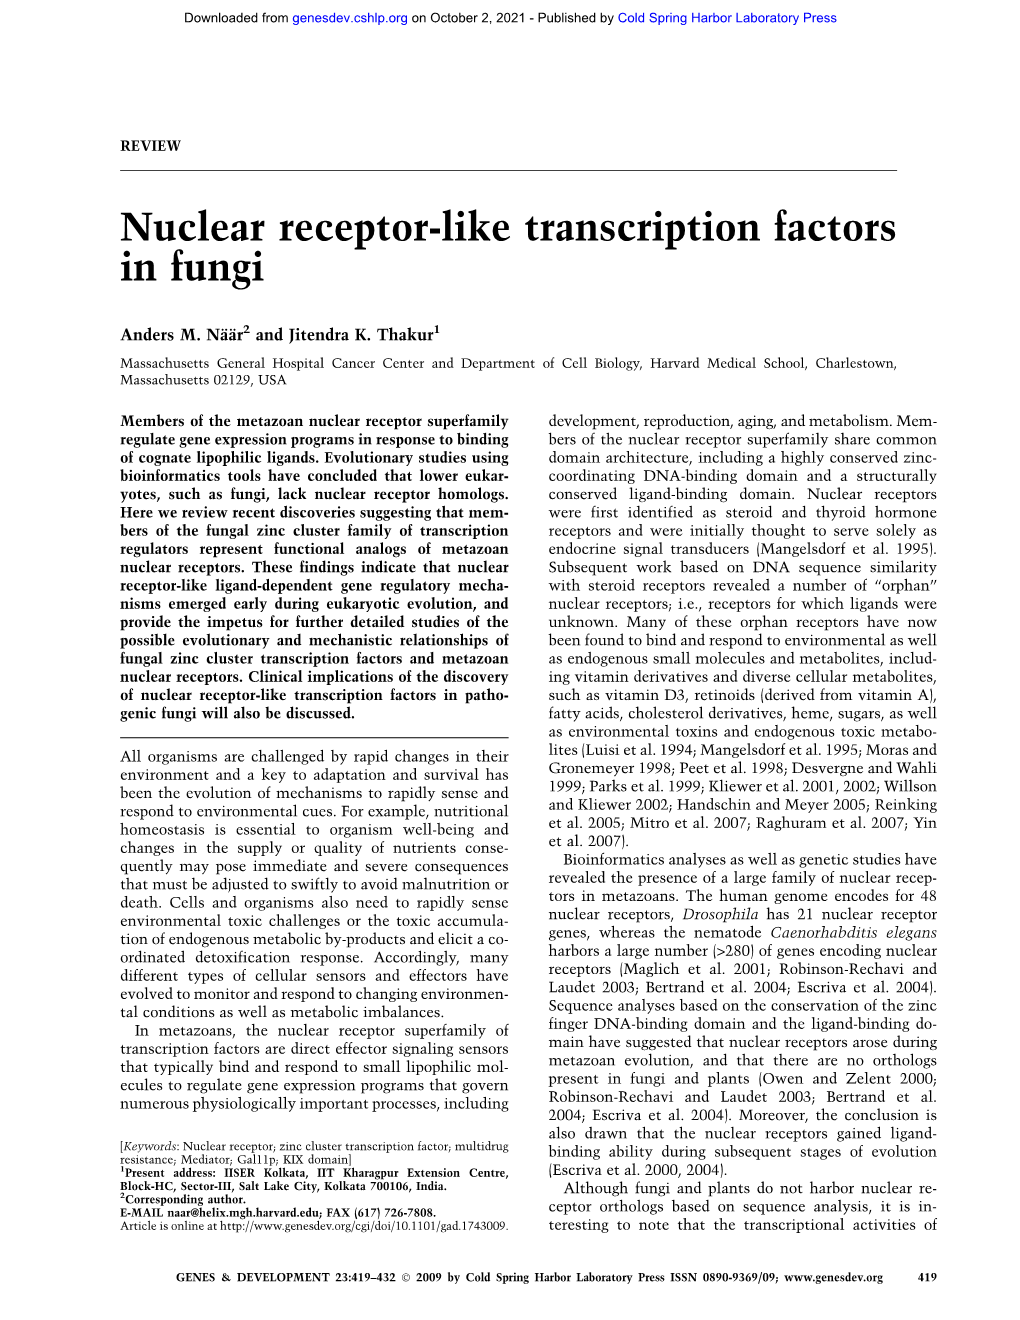 Nuclear Receptor-Like Transcription Factors in Fungi